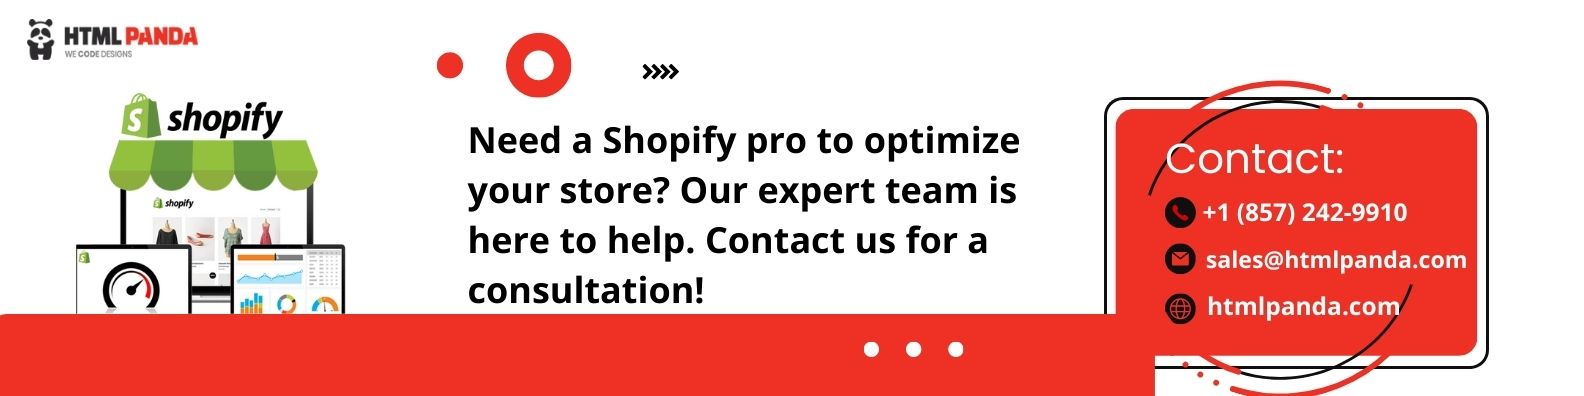 Free Shopify pro consultation